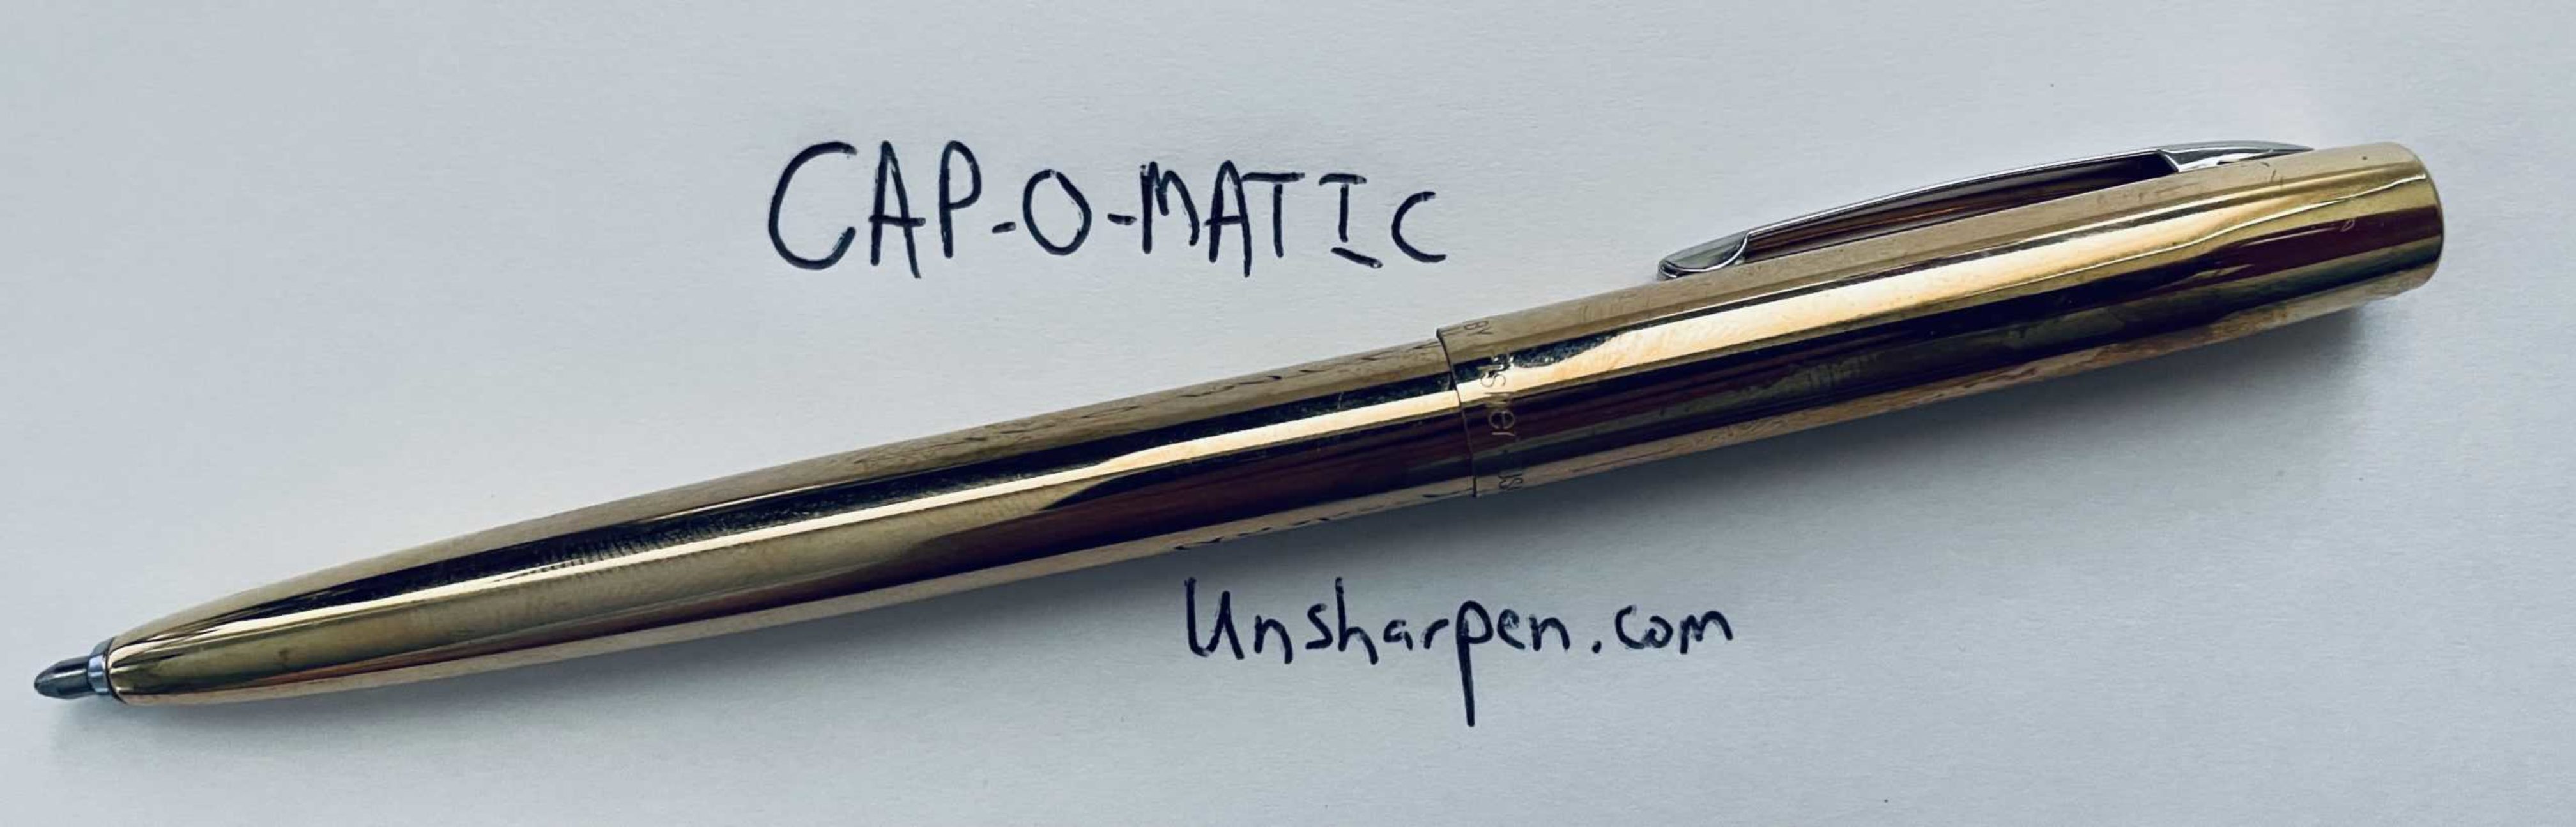 Fisher Space Pen #M4RAW Raw Brass Cap-O-Matic Ballpoint Pen 